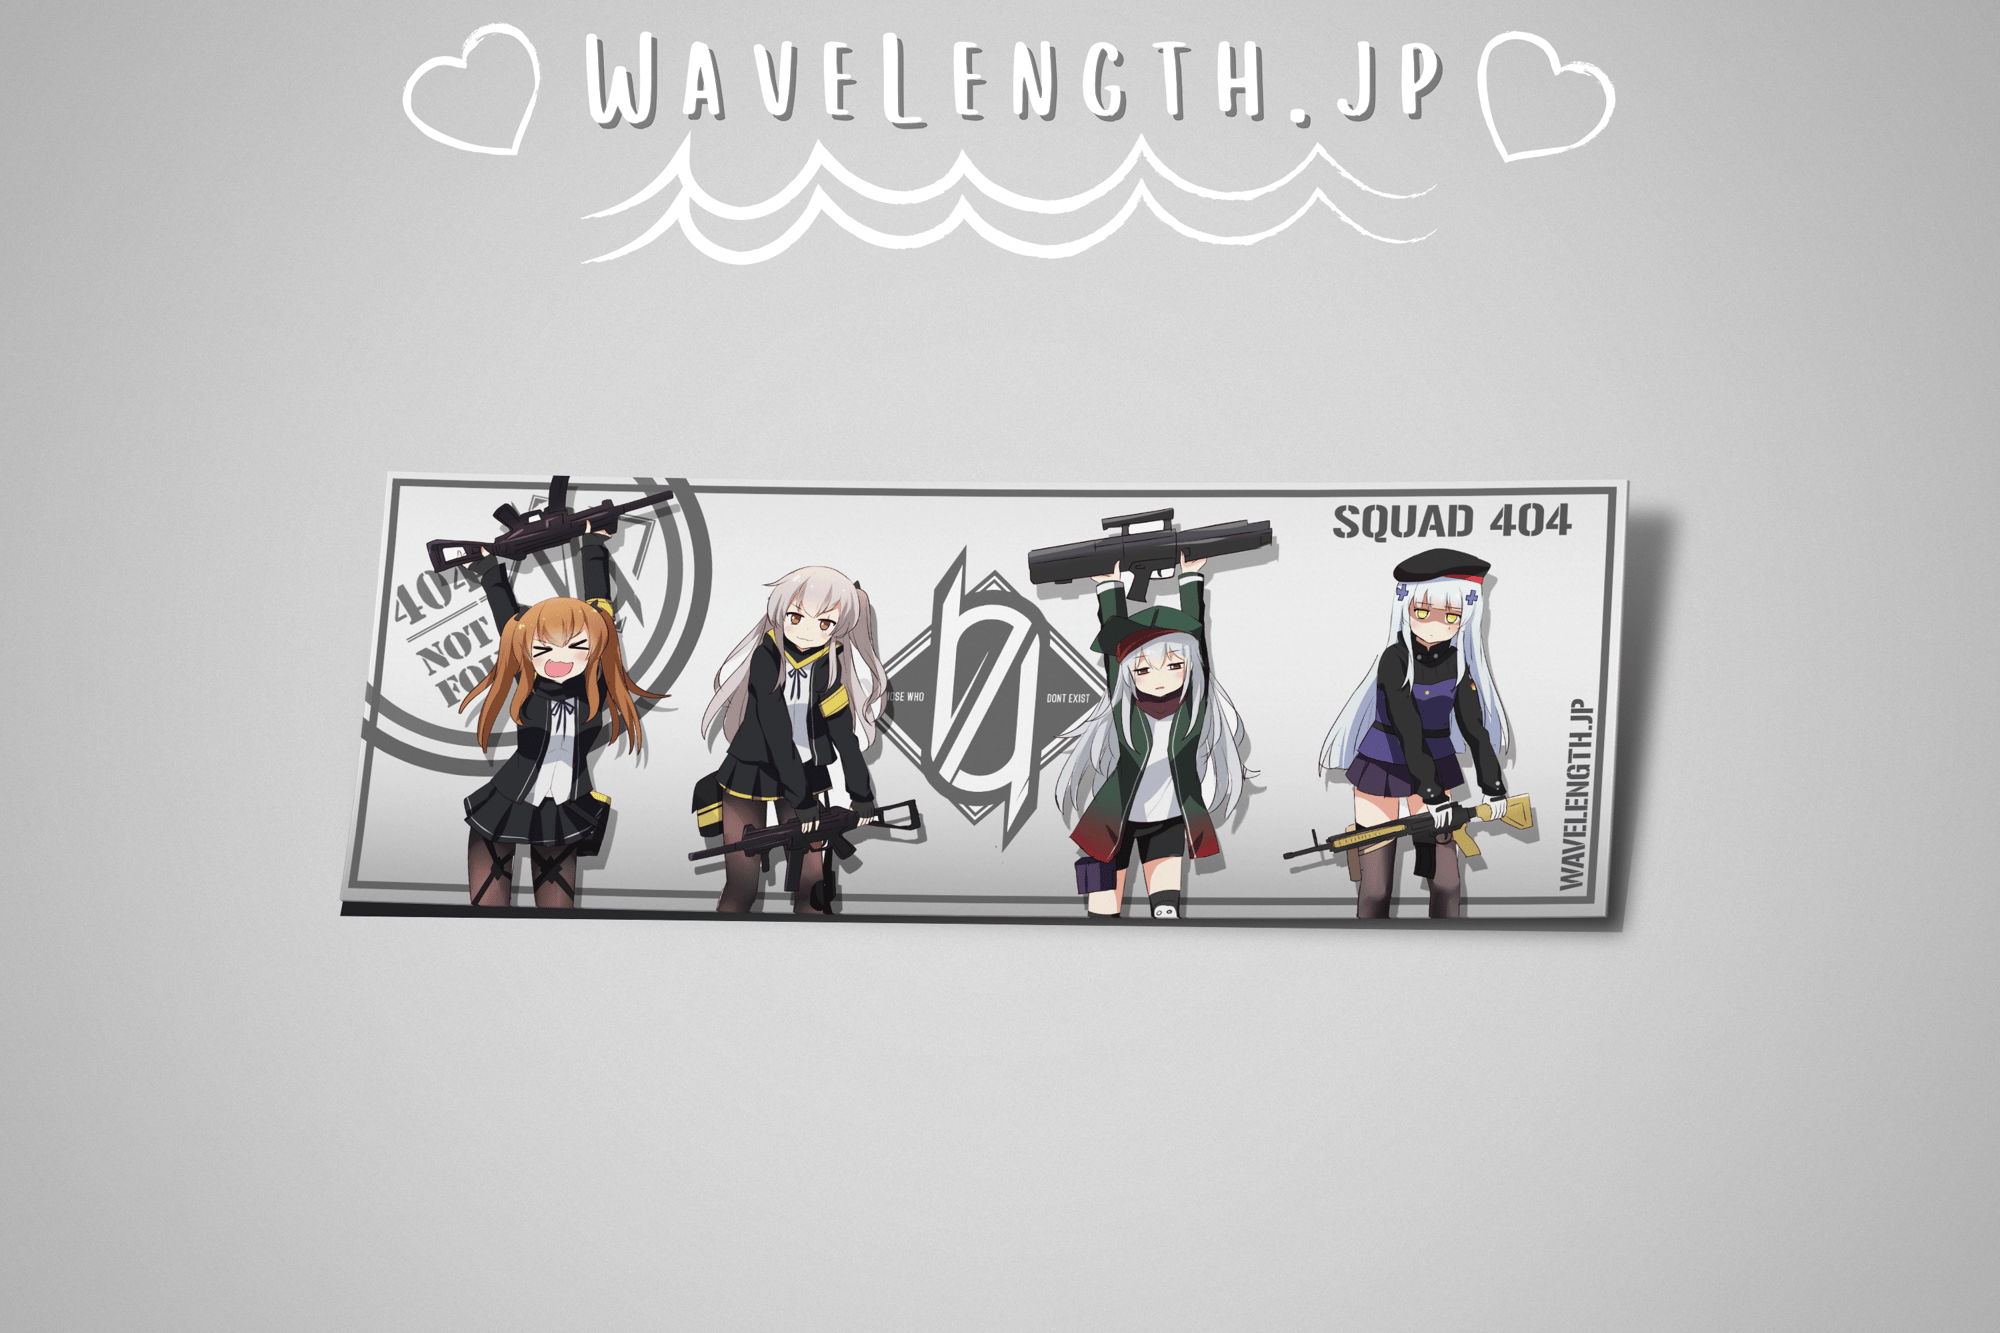 Squad 404 Slap | Wavelength.jp